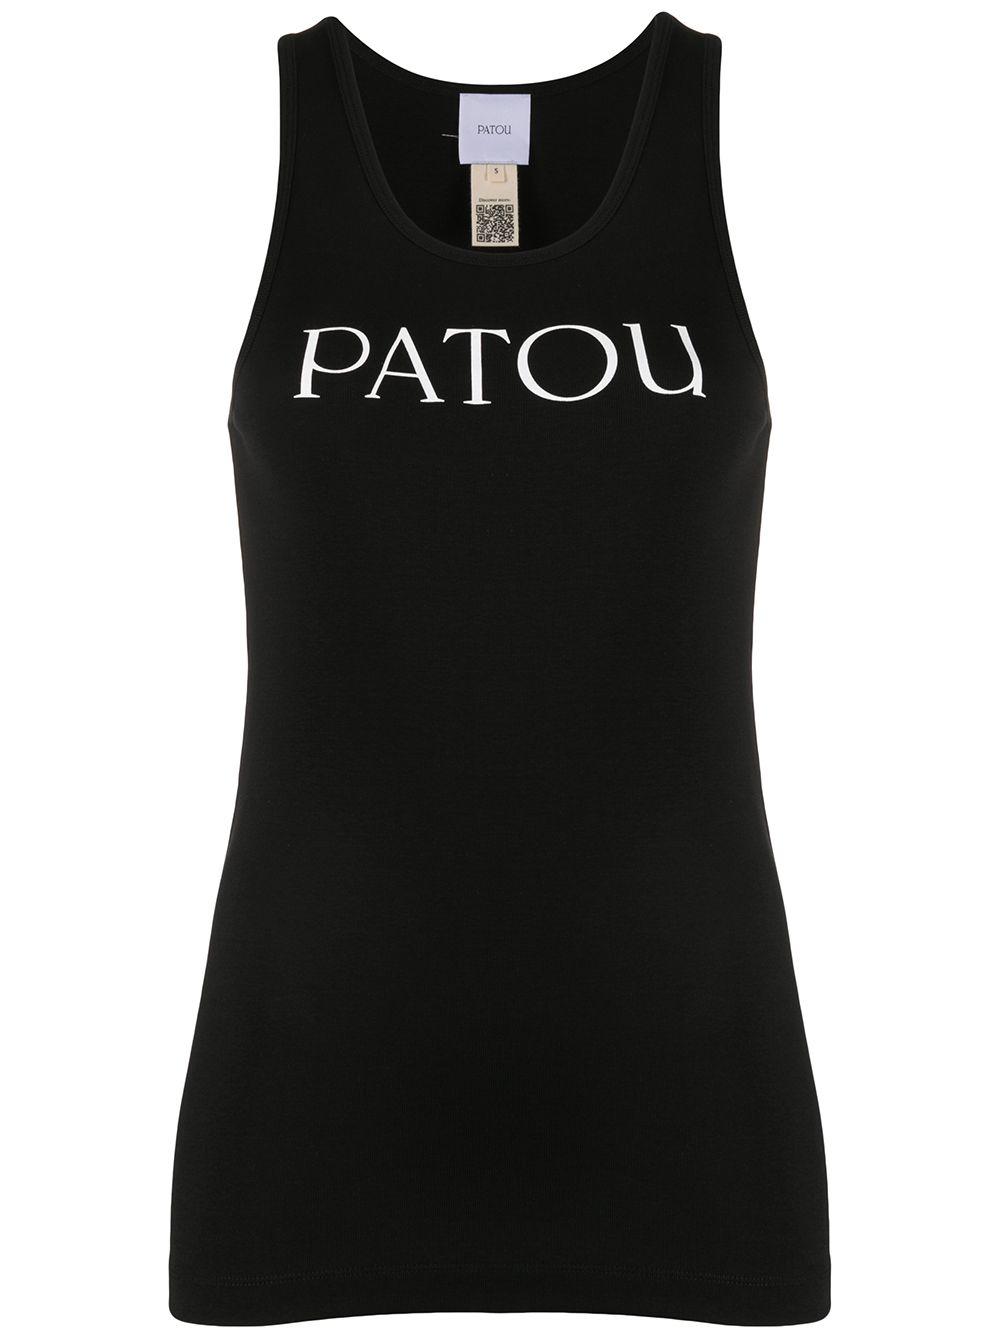 Patou Cotton Scoop Neck Logo Tank Top in Black - Save 23% - Lyst